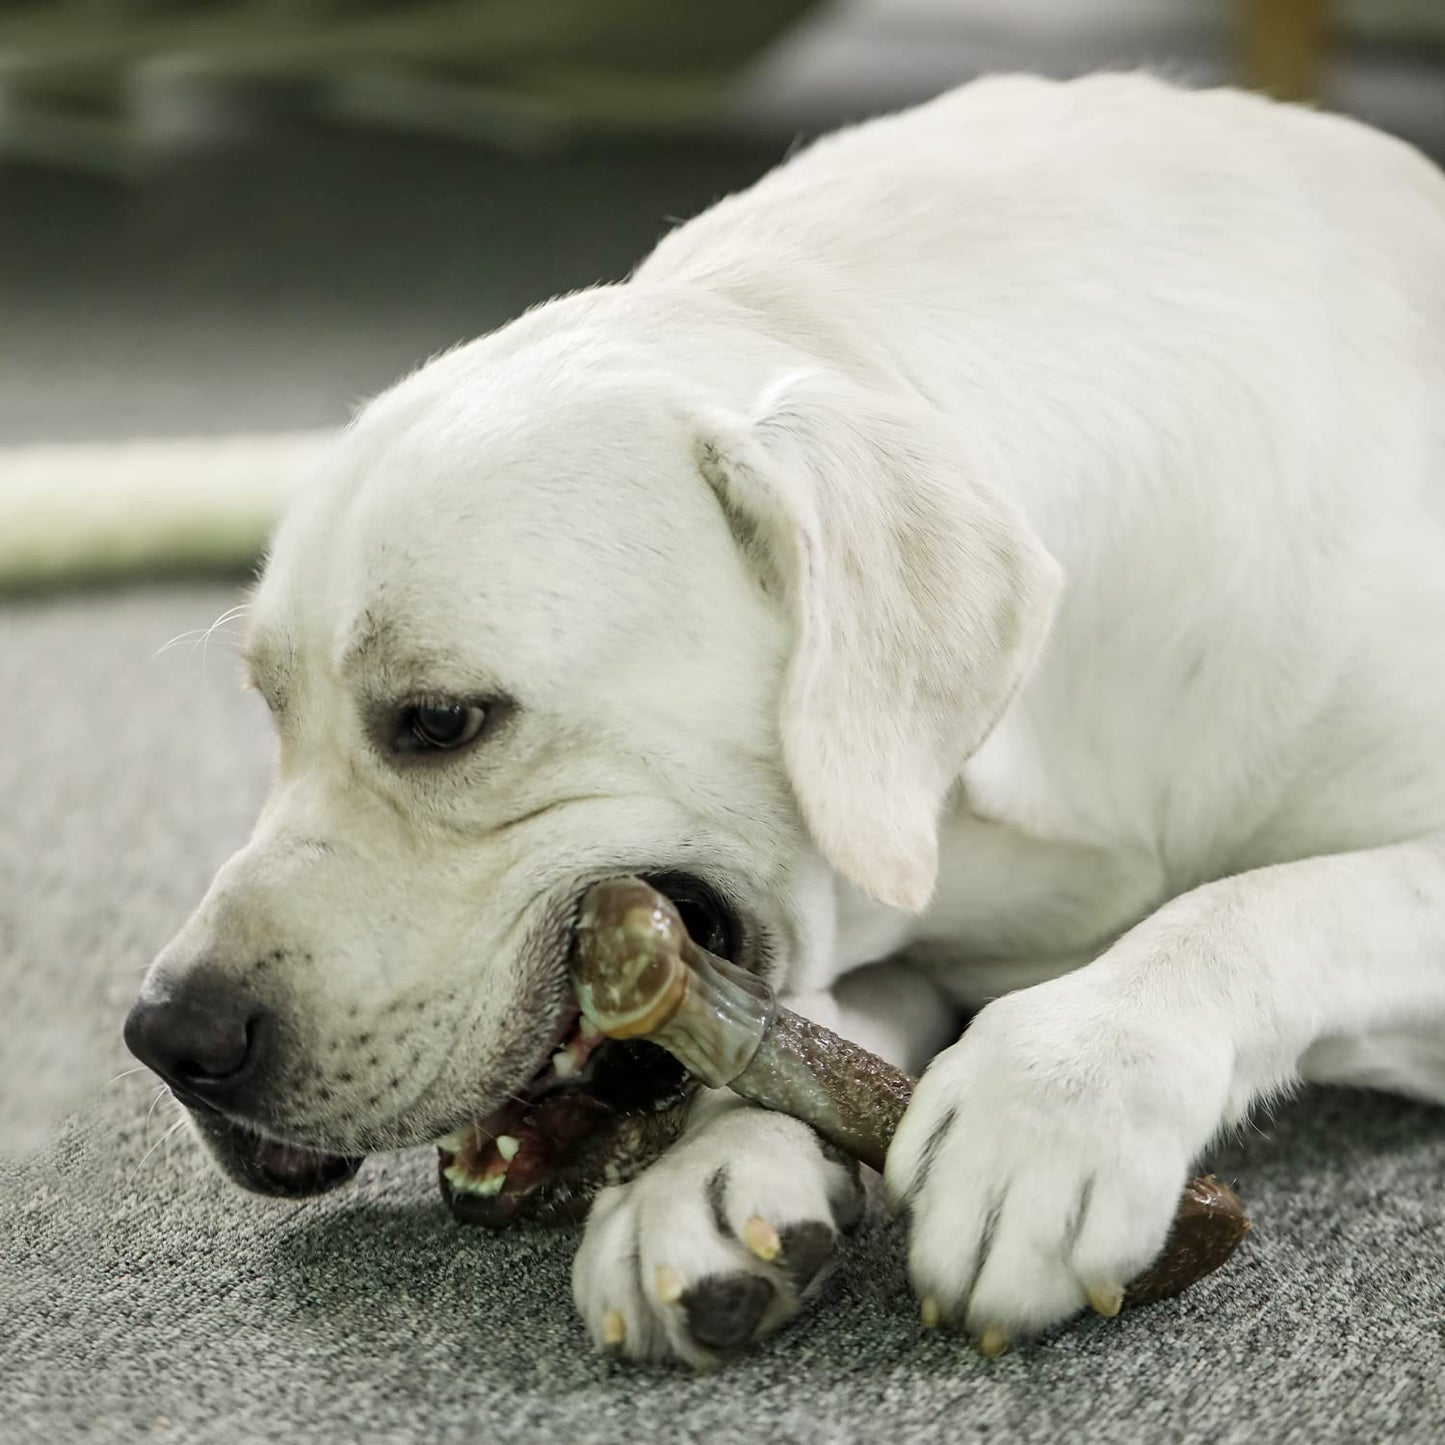 Tikaton Dog Teething Chew Toys HornBones